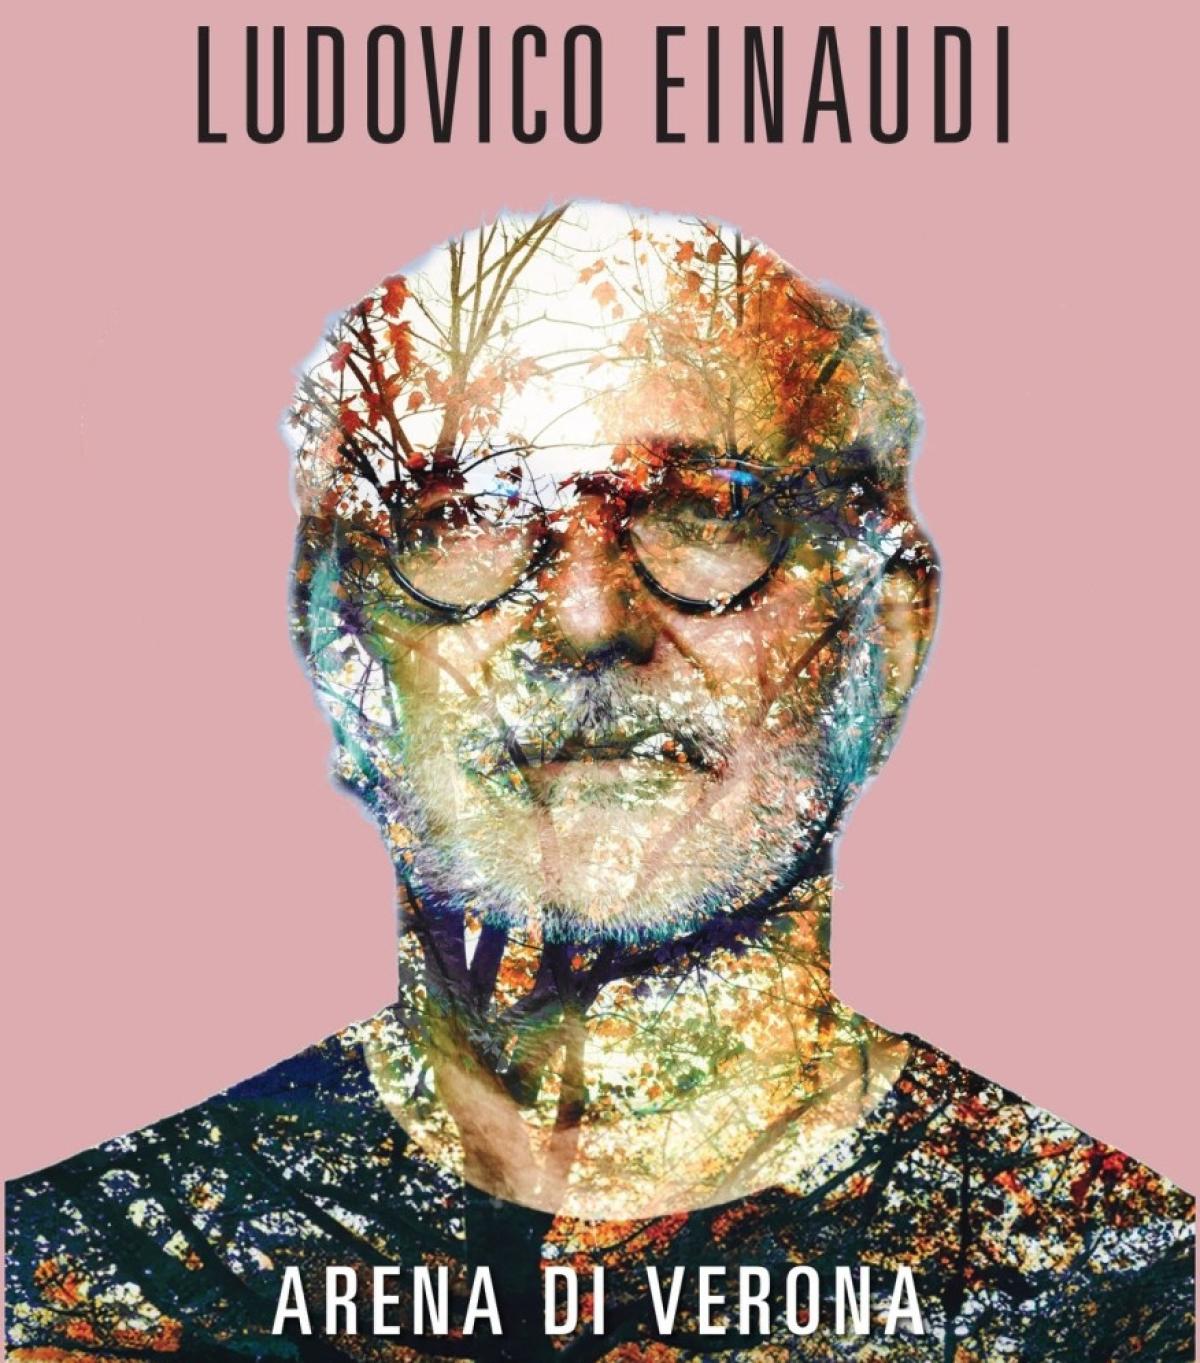 Ludovico Einaudi - In A Time Lapse Reimagined at Arena di Verona Tickets